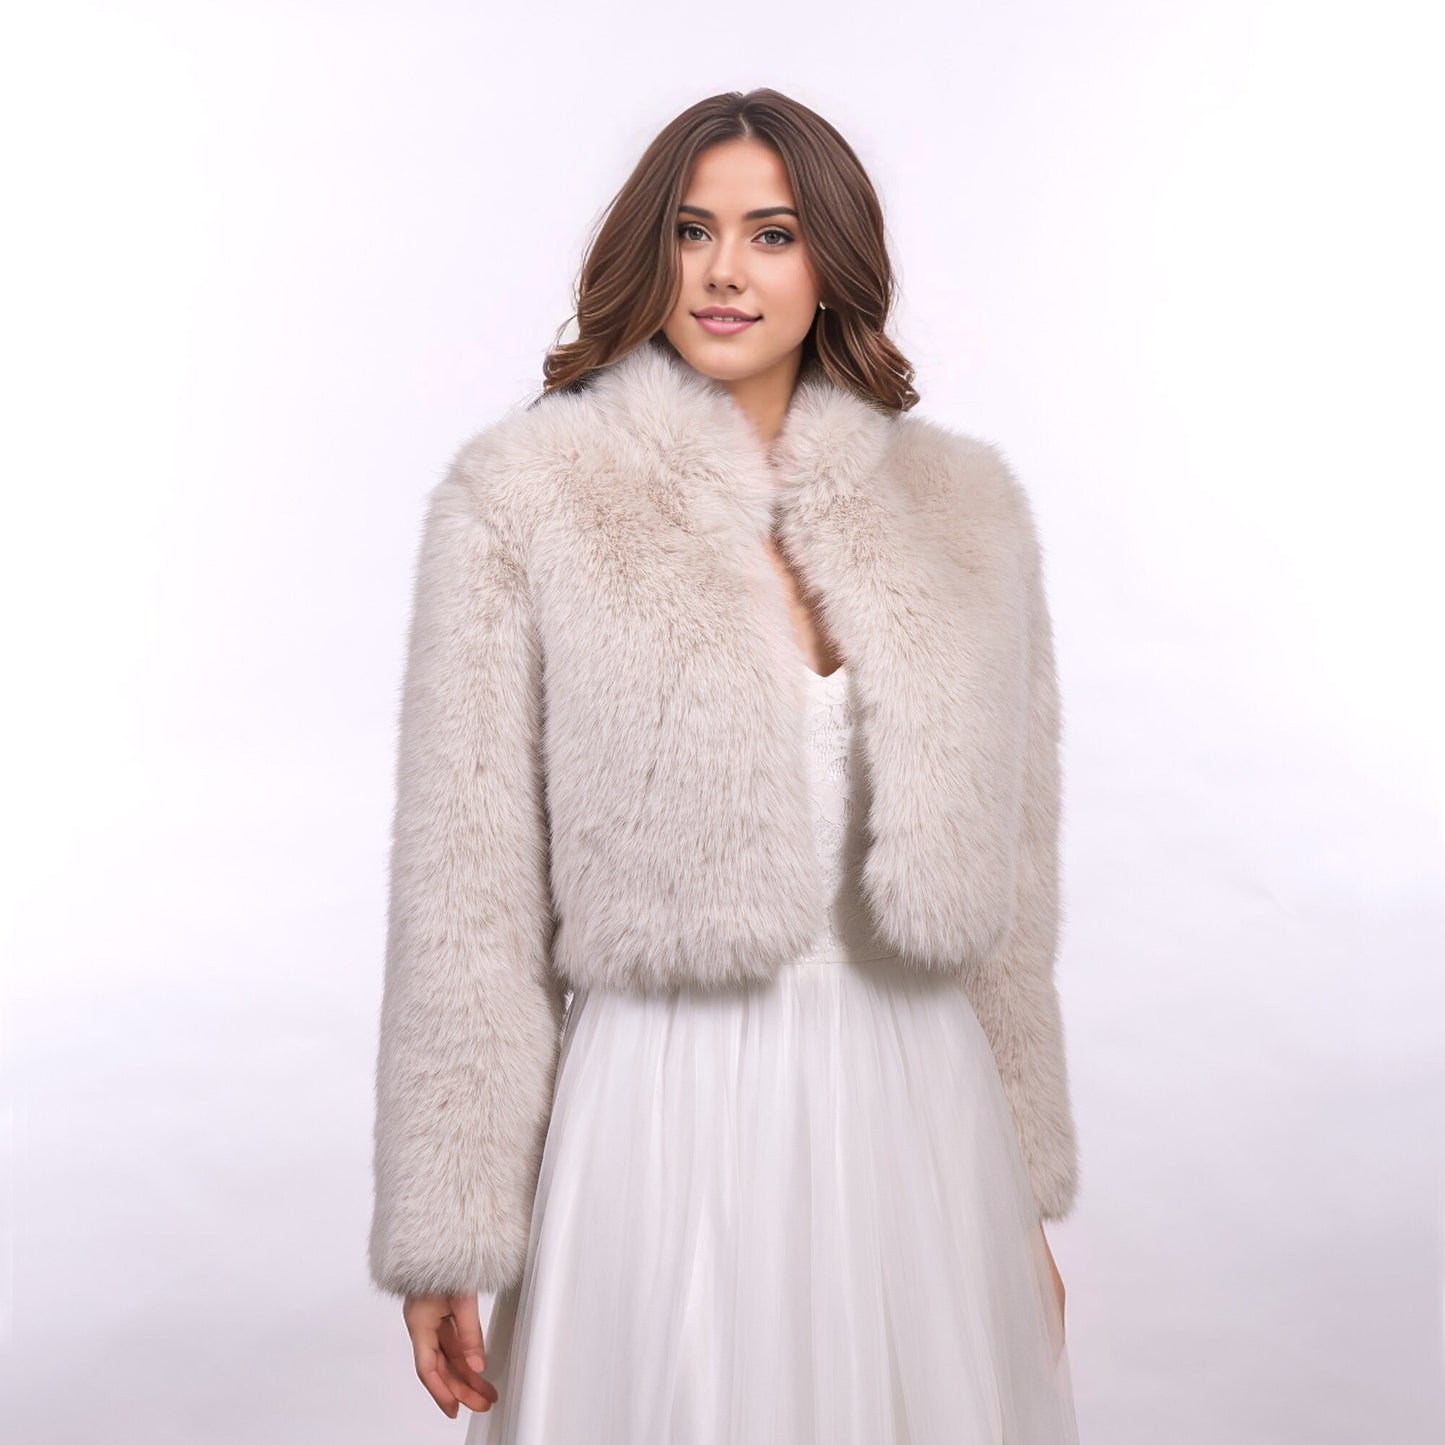 Light blush gray long sleeve faux fur jacket faux fur coat faux fur bolero faux fur shrug FJ003-light-blush-gray